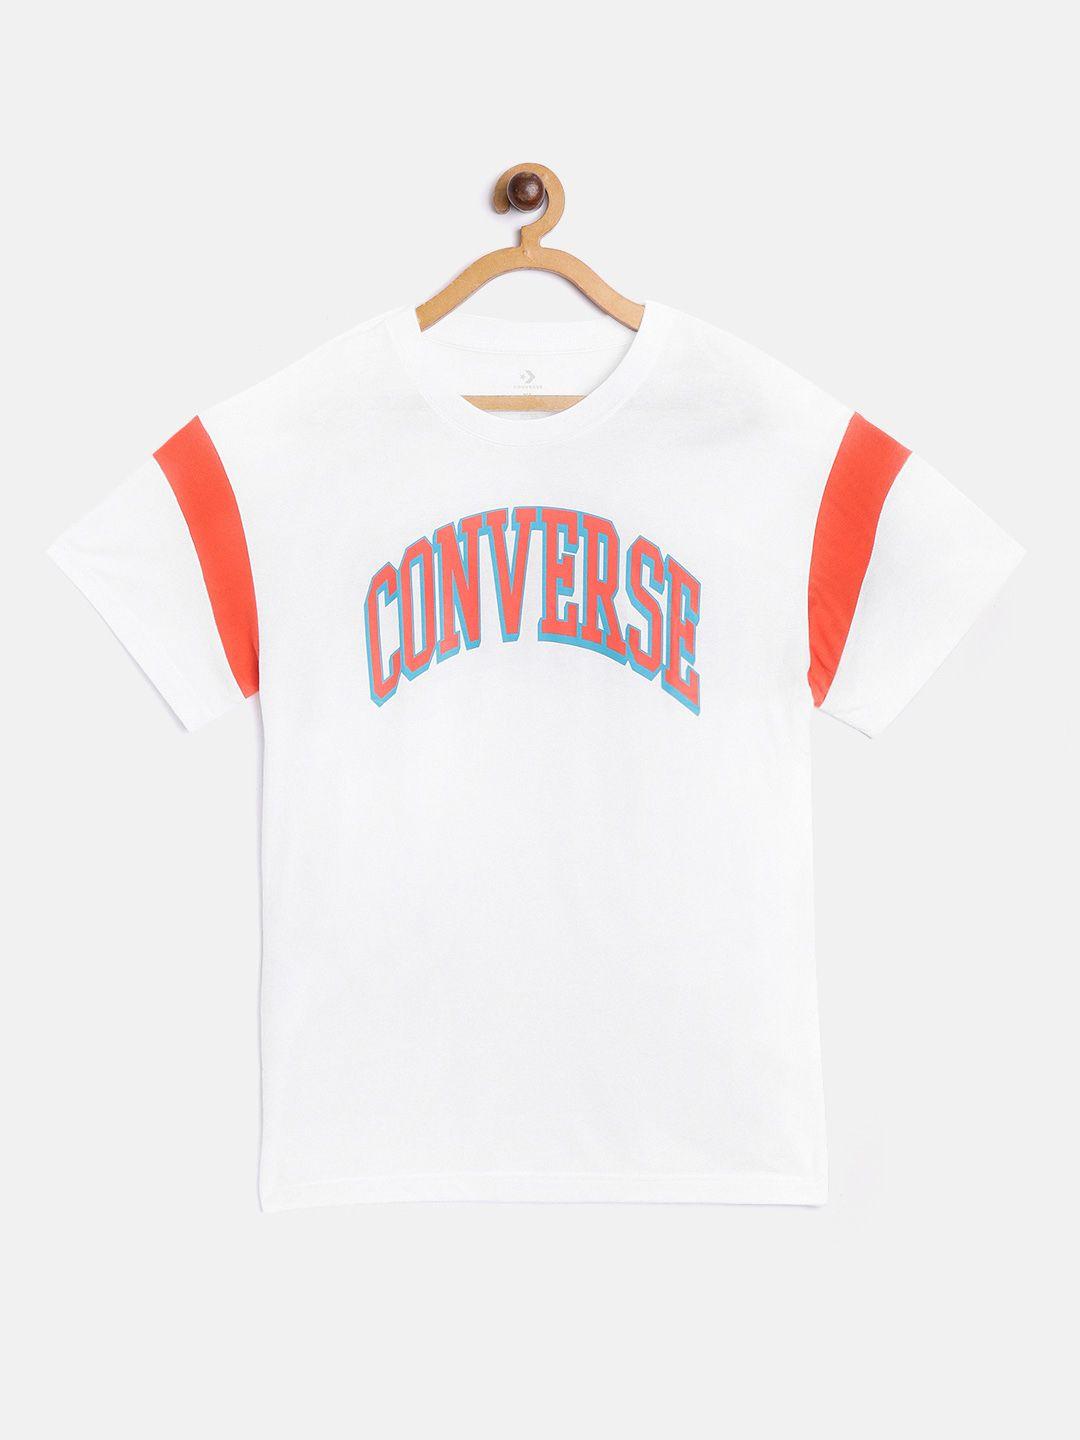 converse boys white  orange pure cotton brand name printed round neck pure cotton t-shirt